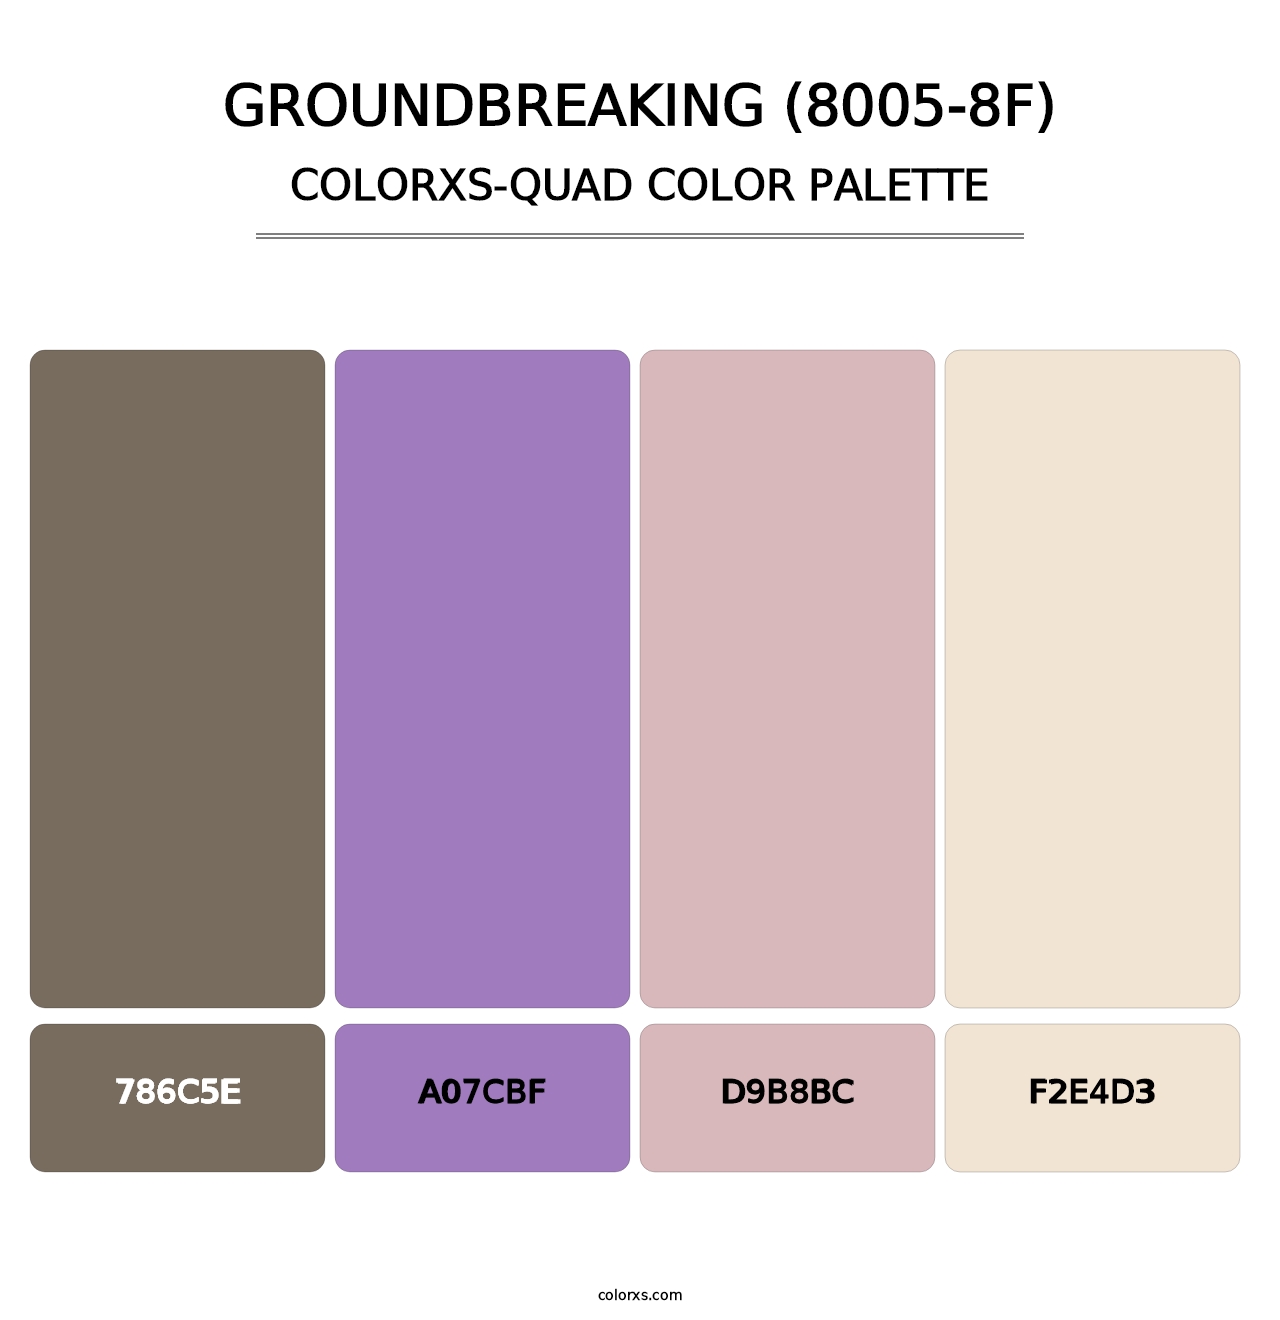 Groundbreaking (8005-8F) - Colorxs Quad Palette